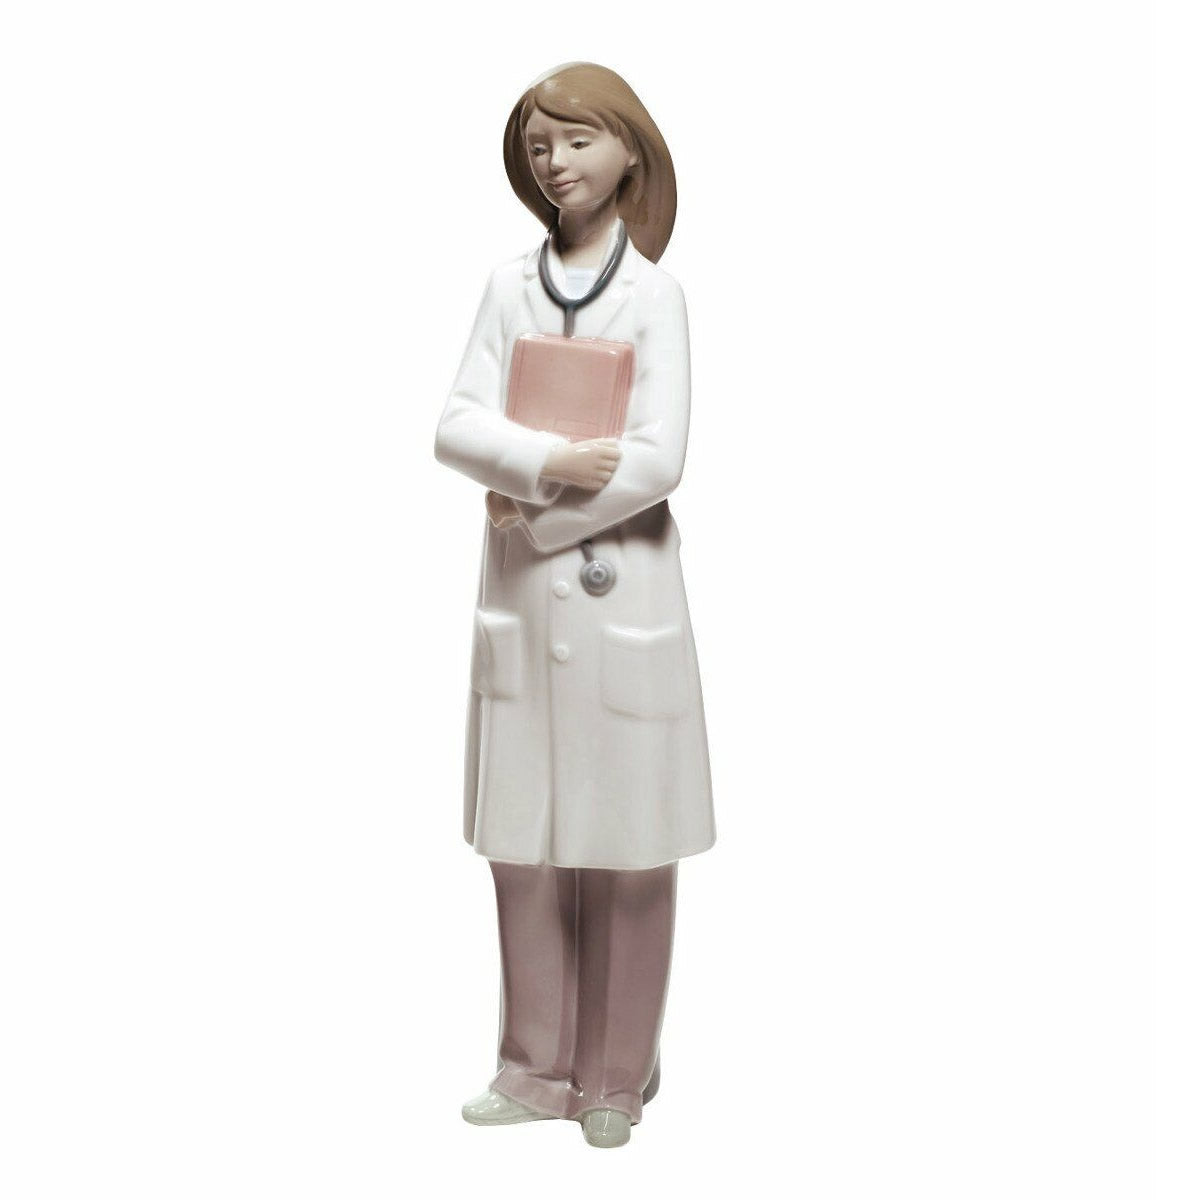 Doctor Figurine by NAO- Female